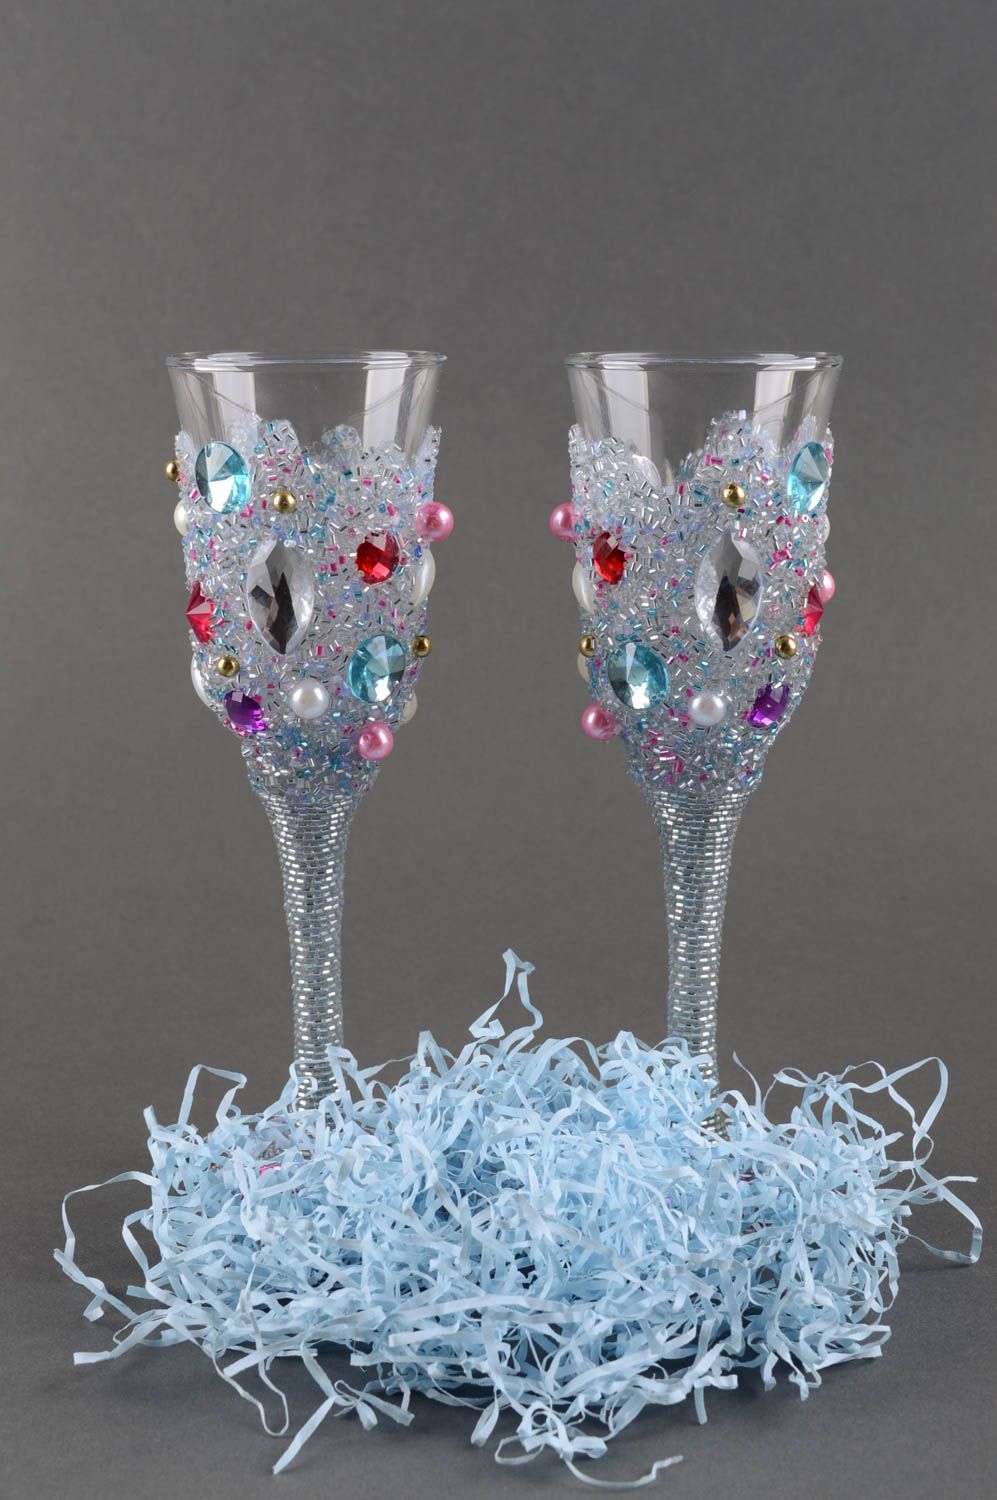 Handmade glasses champagne glasses wedding glasses set of 2 items gift ideas photo 1